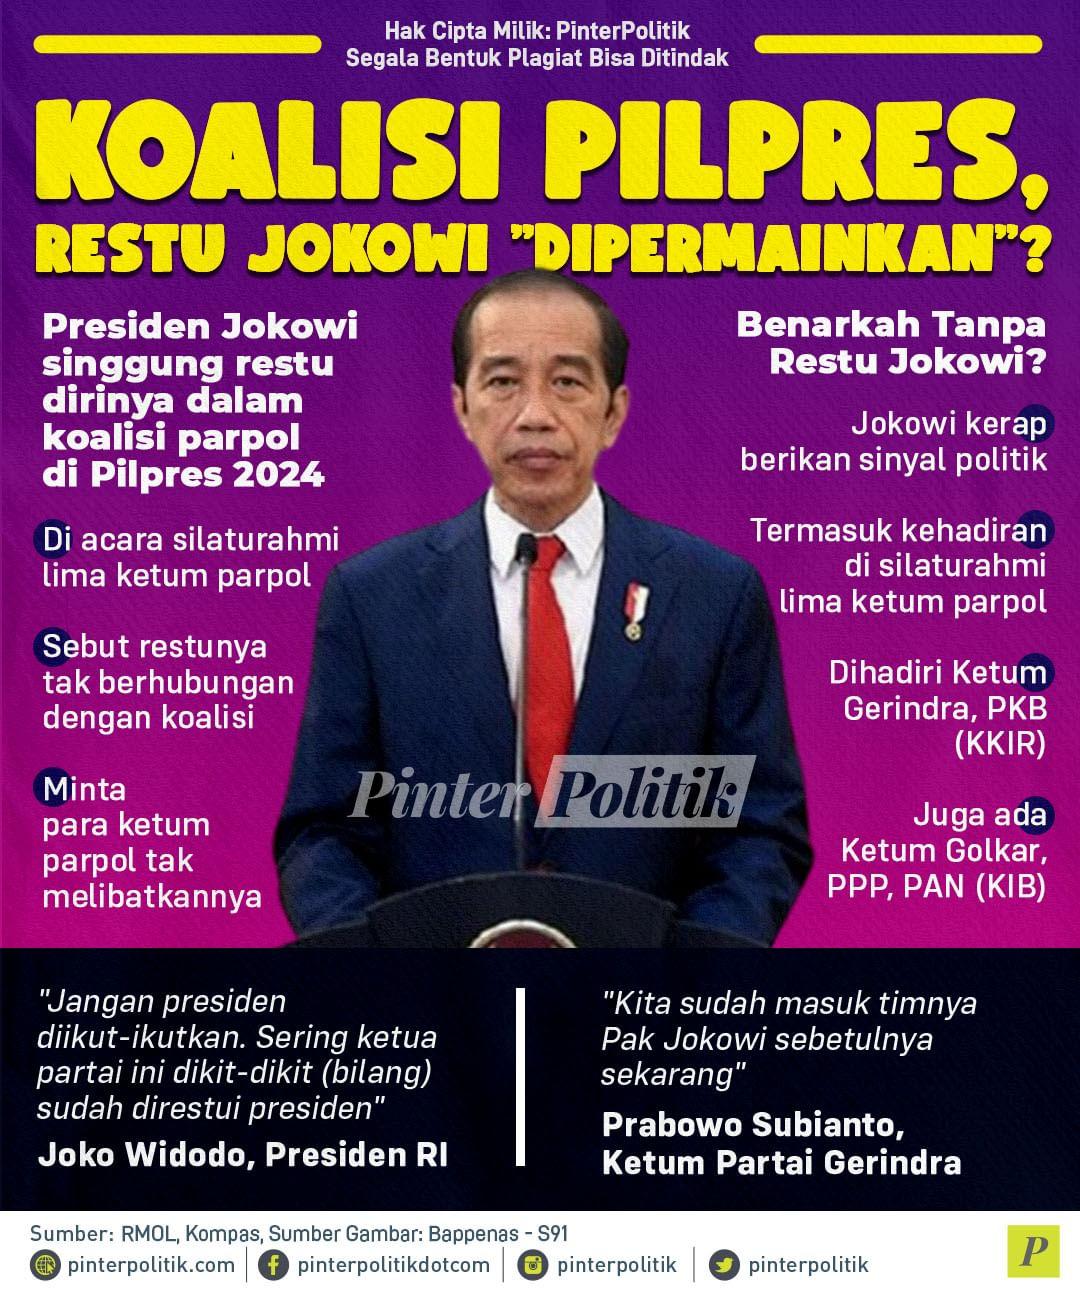 Koalisi Pilpres Restu Jokowi Dipermainkan